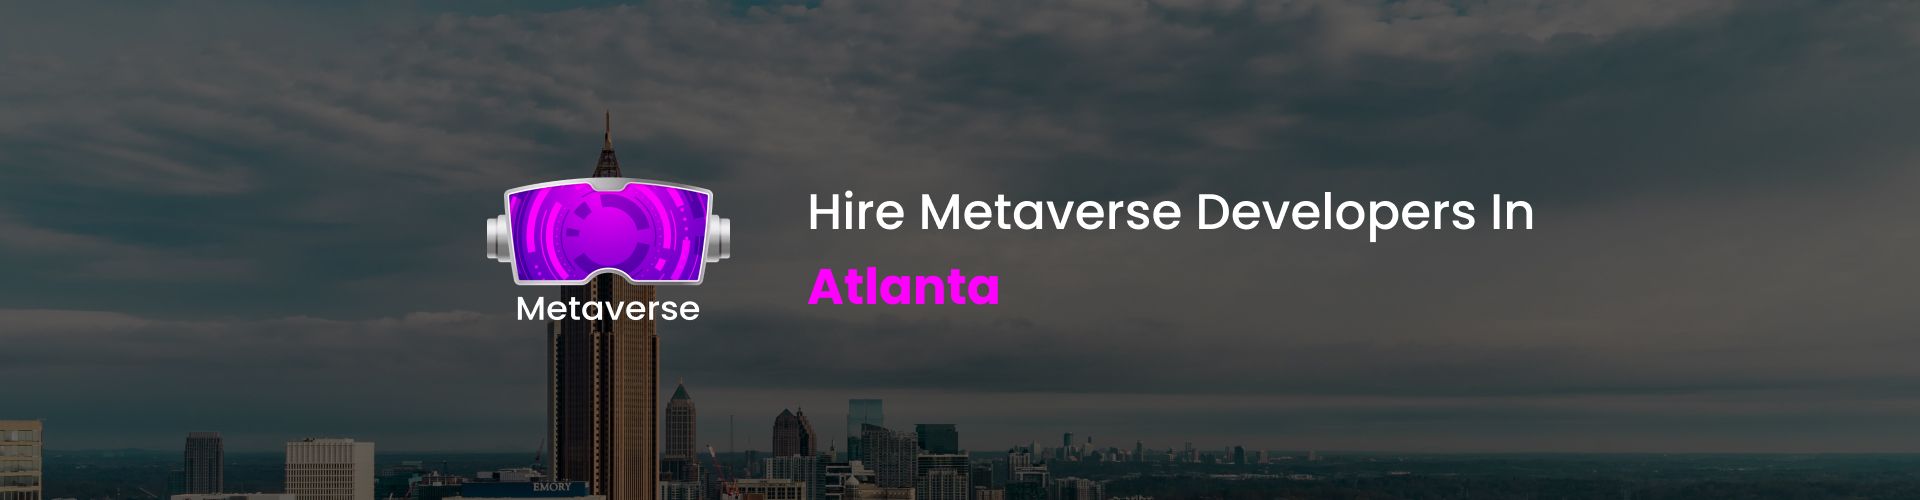 hire metaverse developers in atlanta